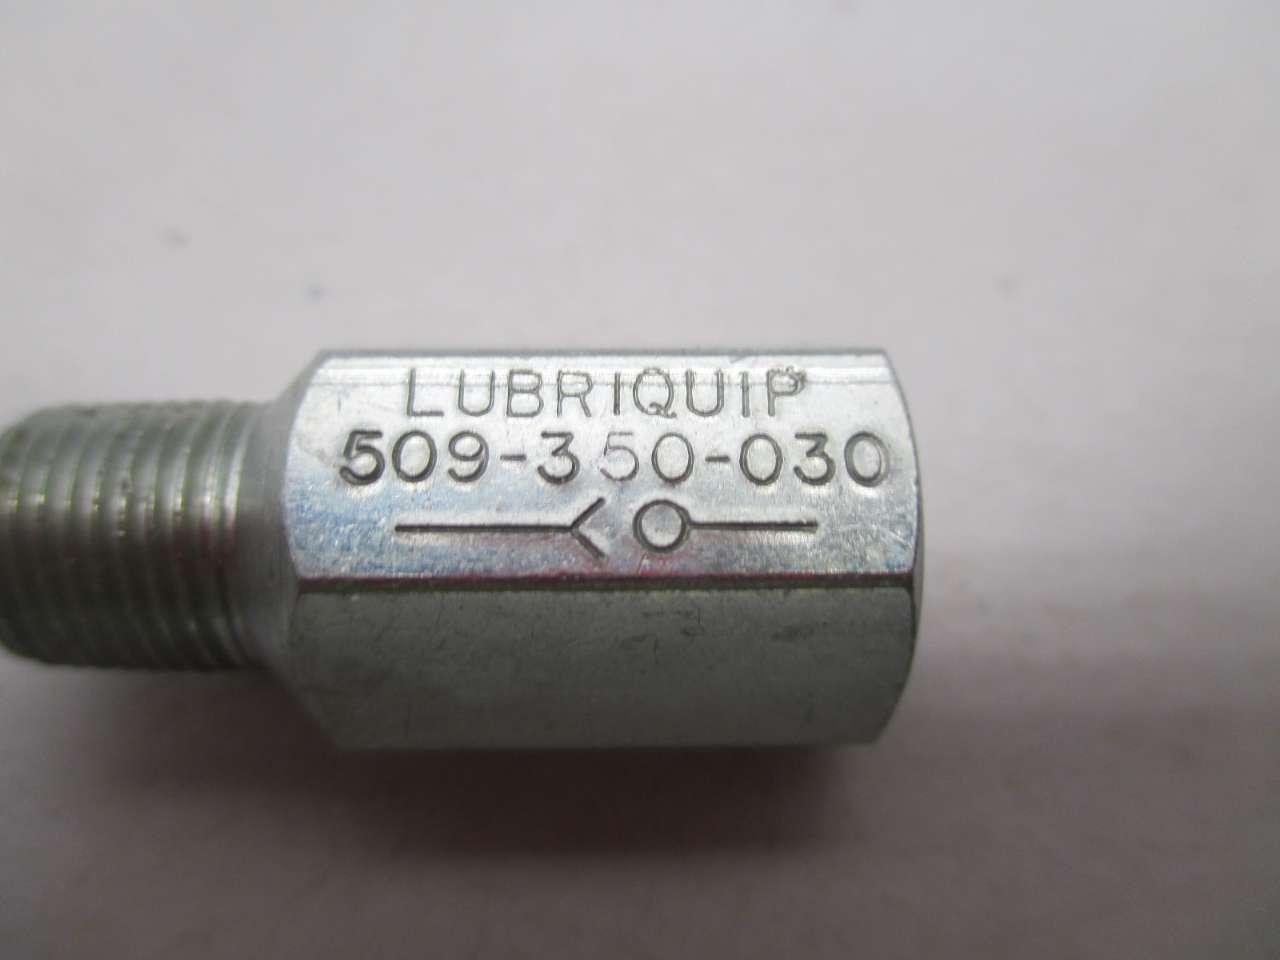 Lubriquip 509-360-030 1/4" Check Valve 